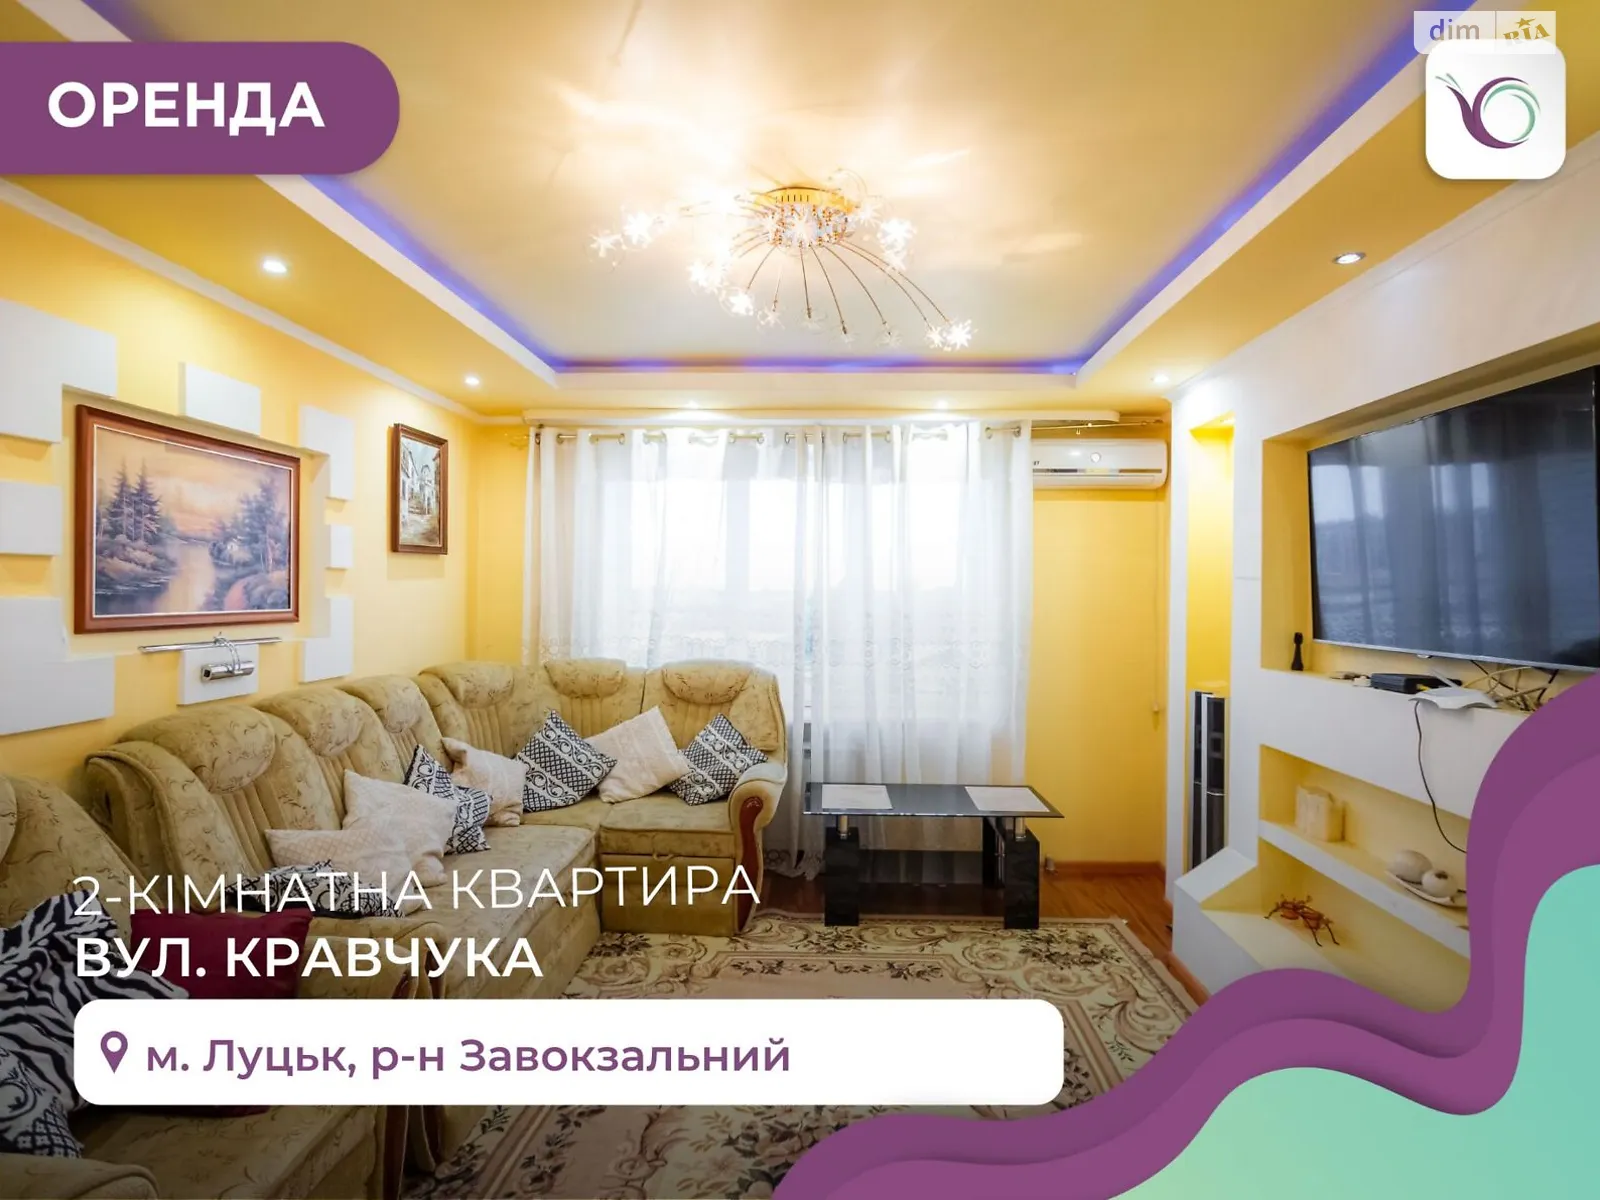 2-кімнатна квартира 55 кв. м у Луцьку, цена: 13000 грн